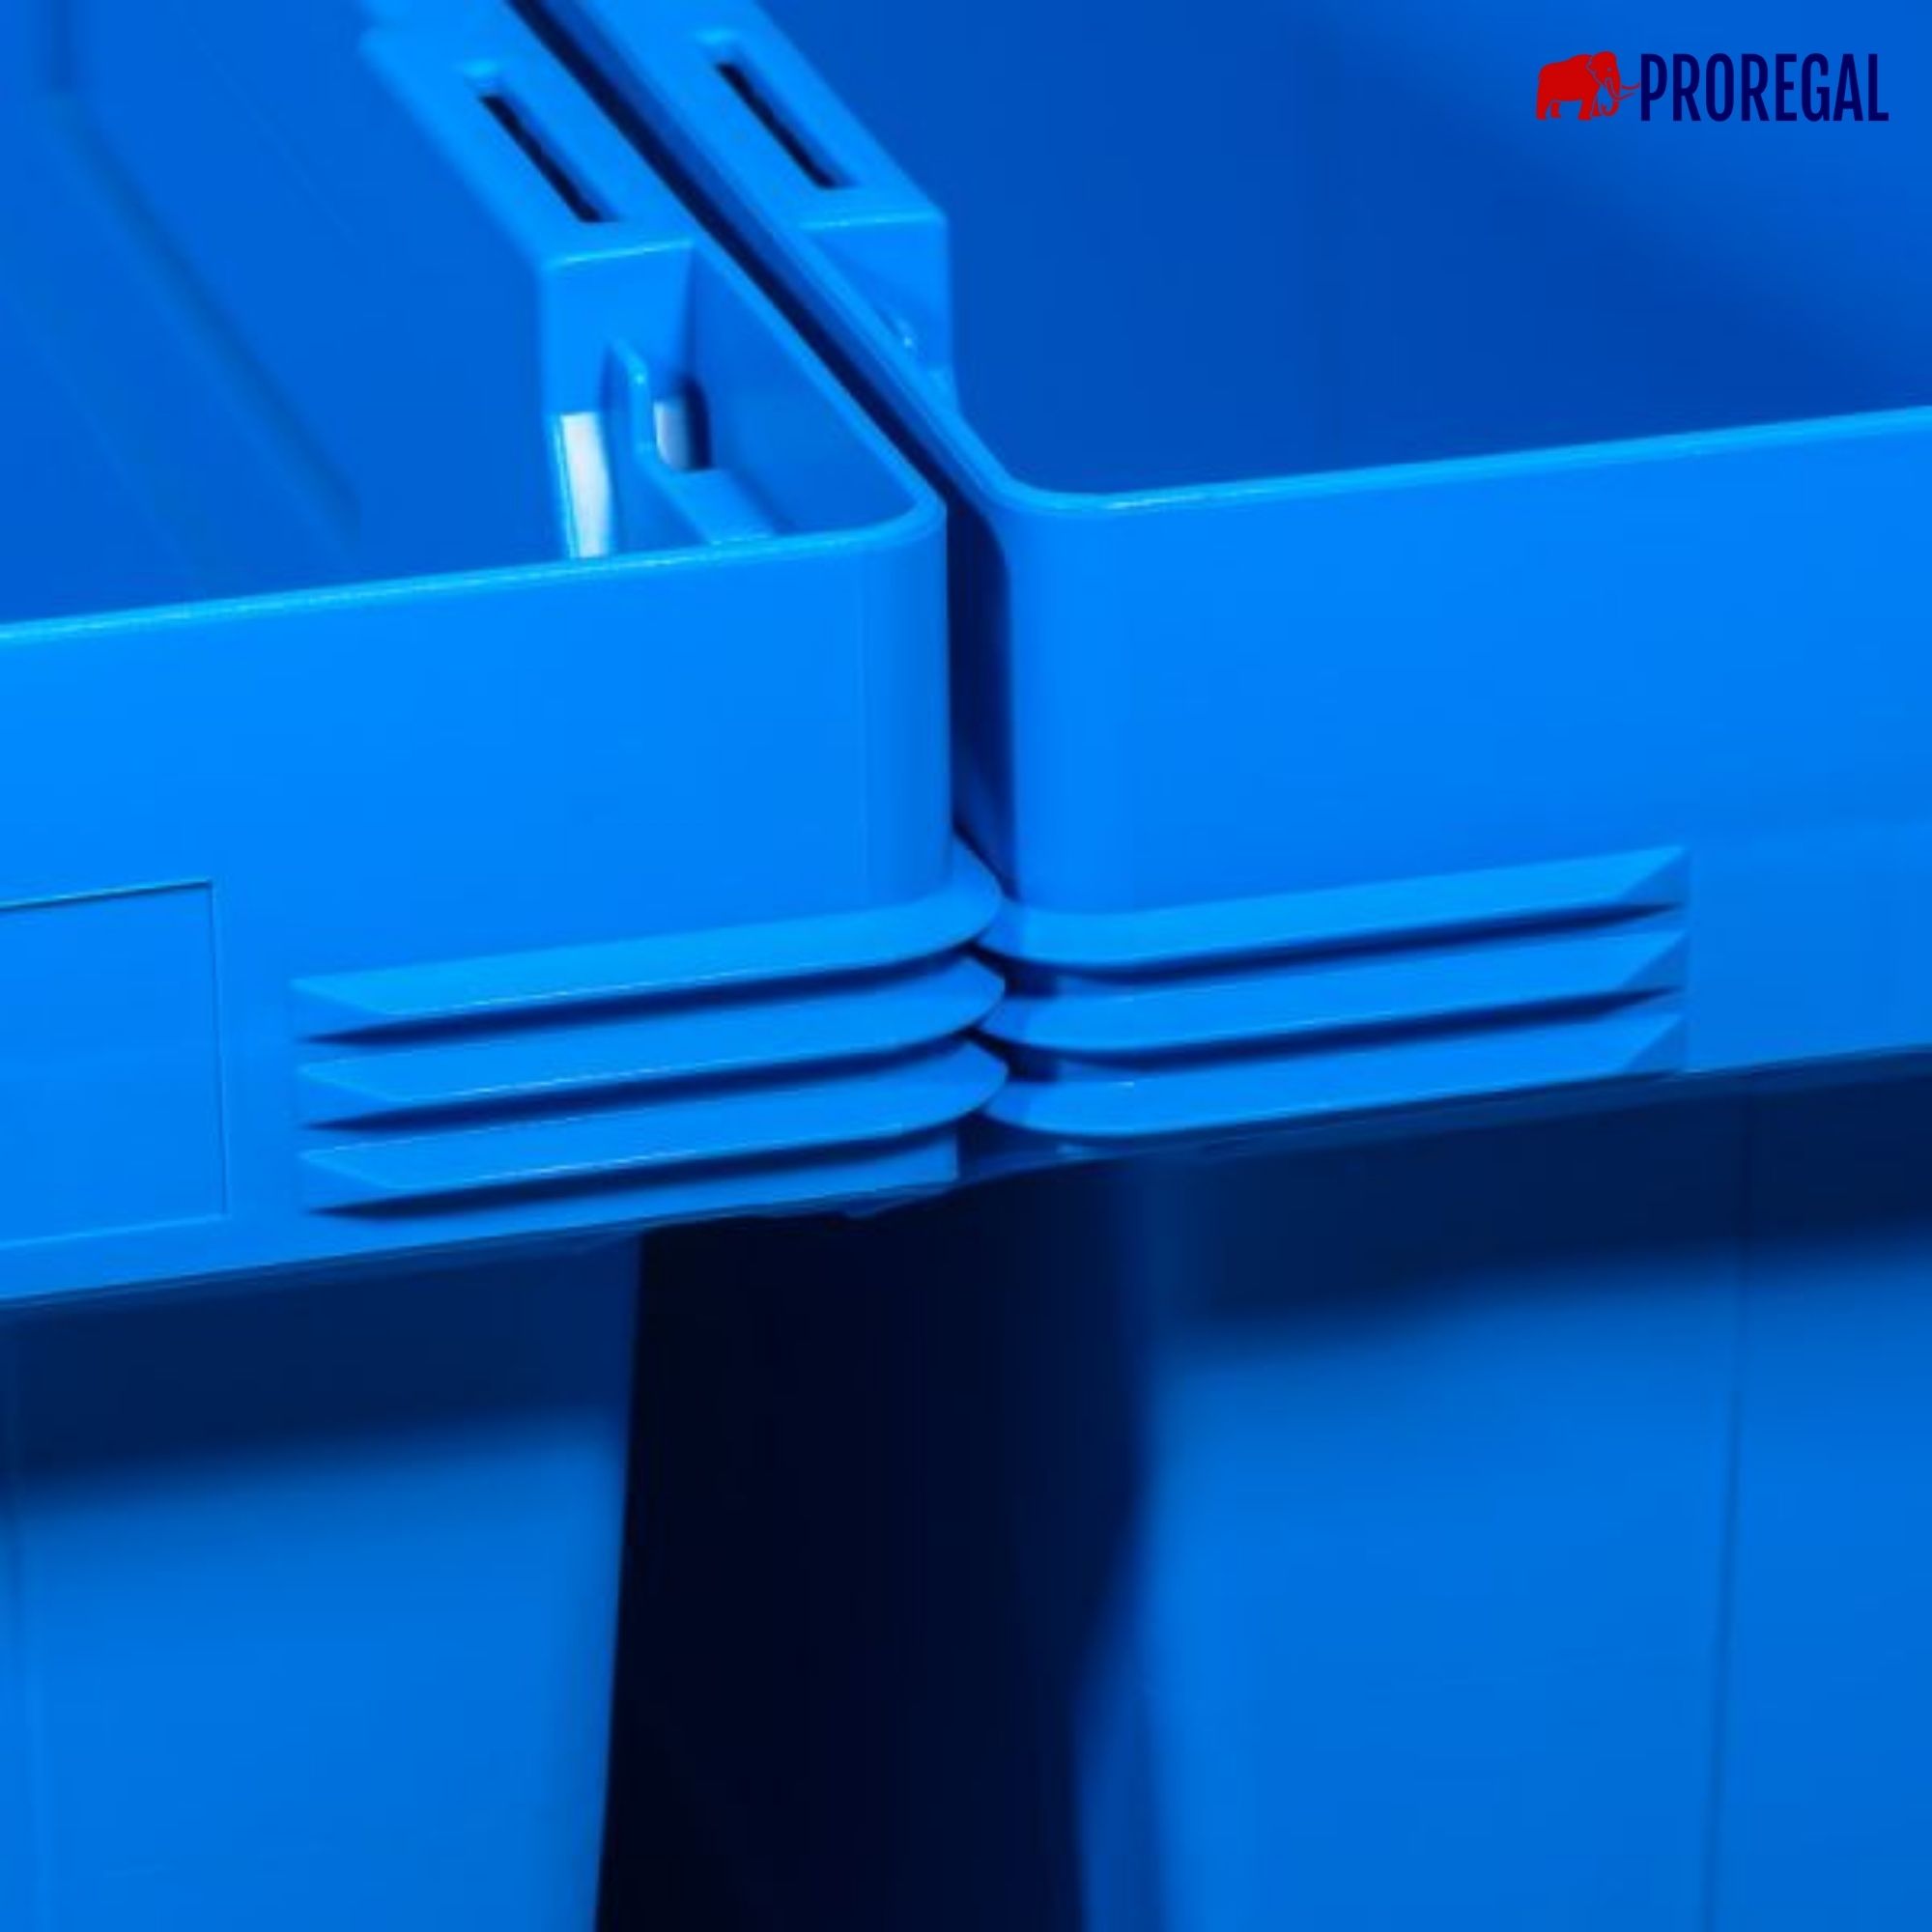 Conical Mehrweg-Stapelbehälter Blau | HxBxT 27,3x40x60cm | 47 Liter | Lagerbox Eurobox Transportbox Transportbehälter Stapelbehälter